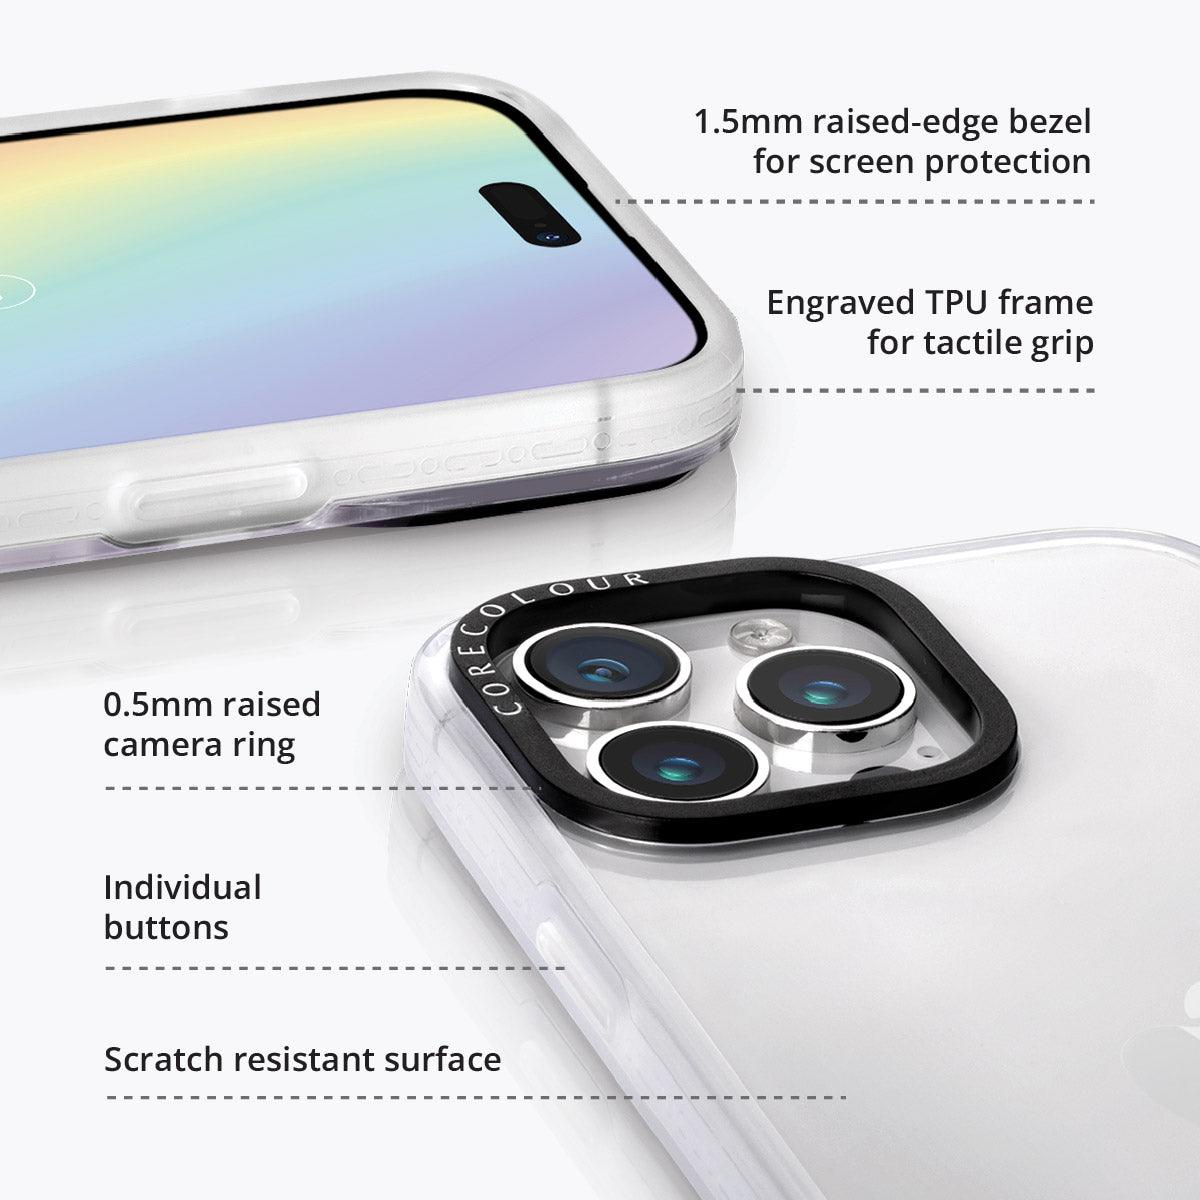 iPhone 12 Pro Max Clear Glitter Phone Case - CORECOLOUR AU